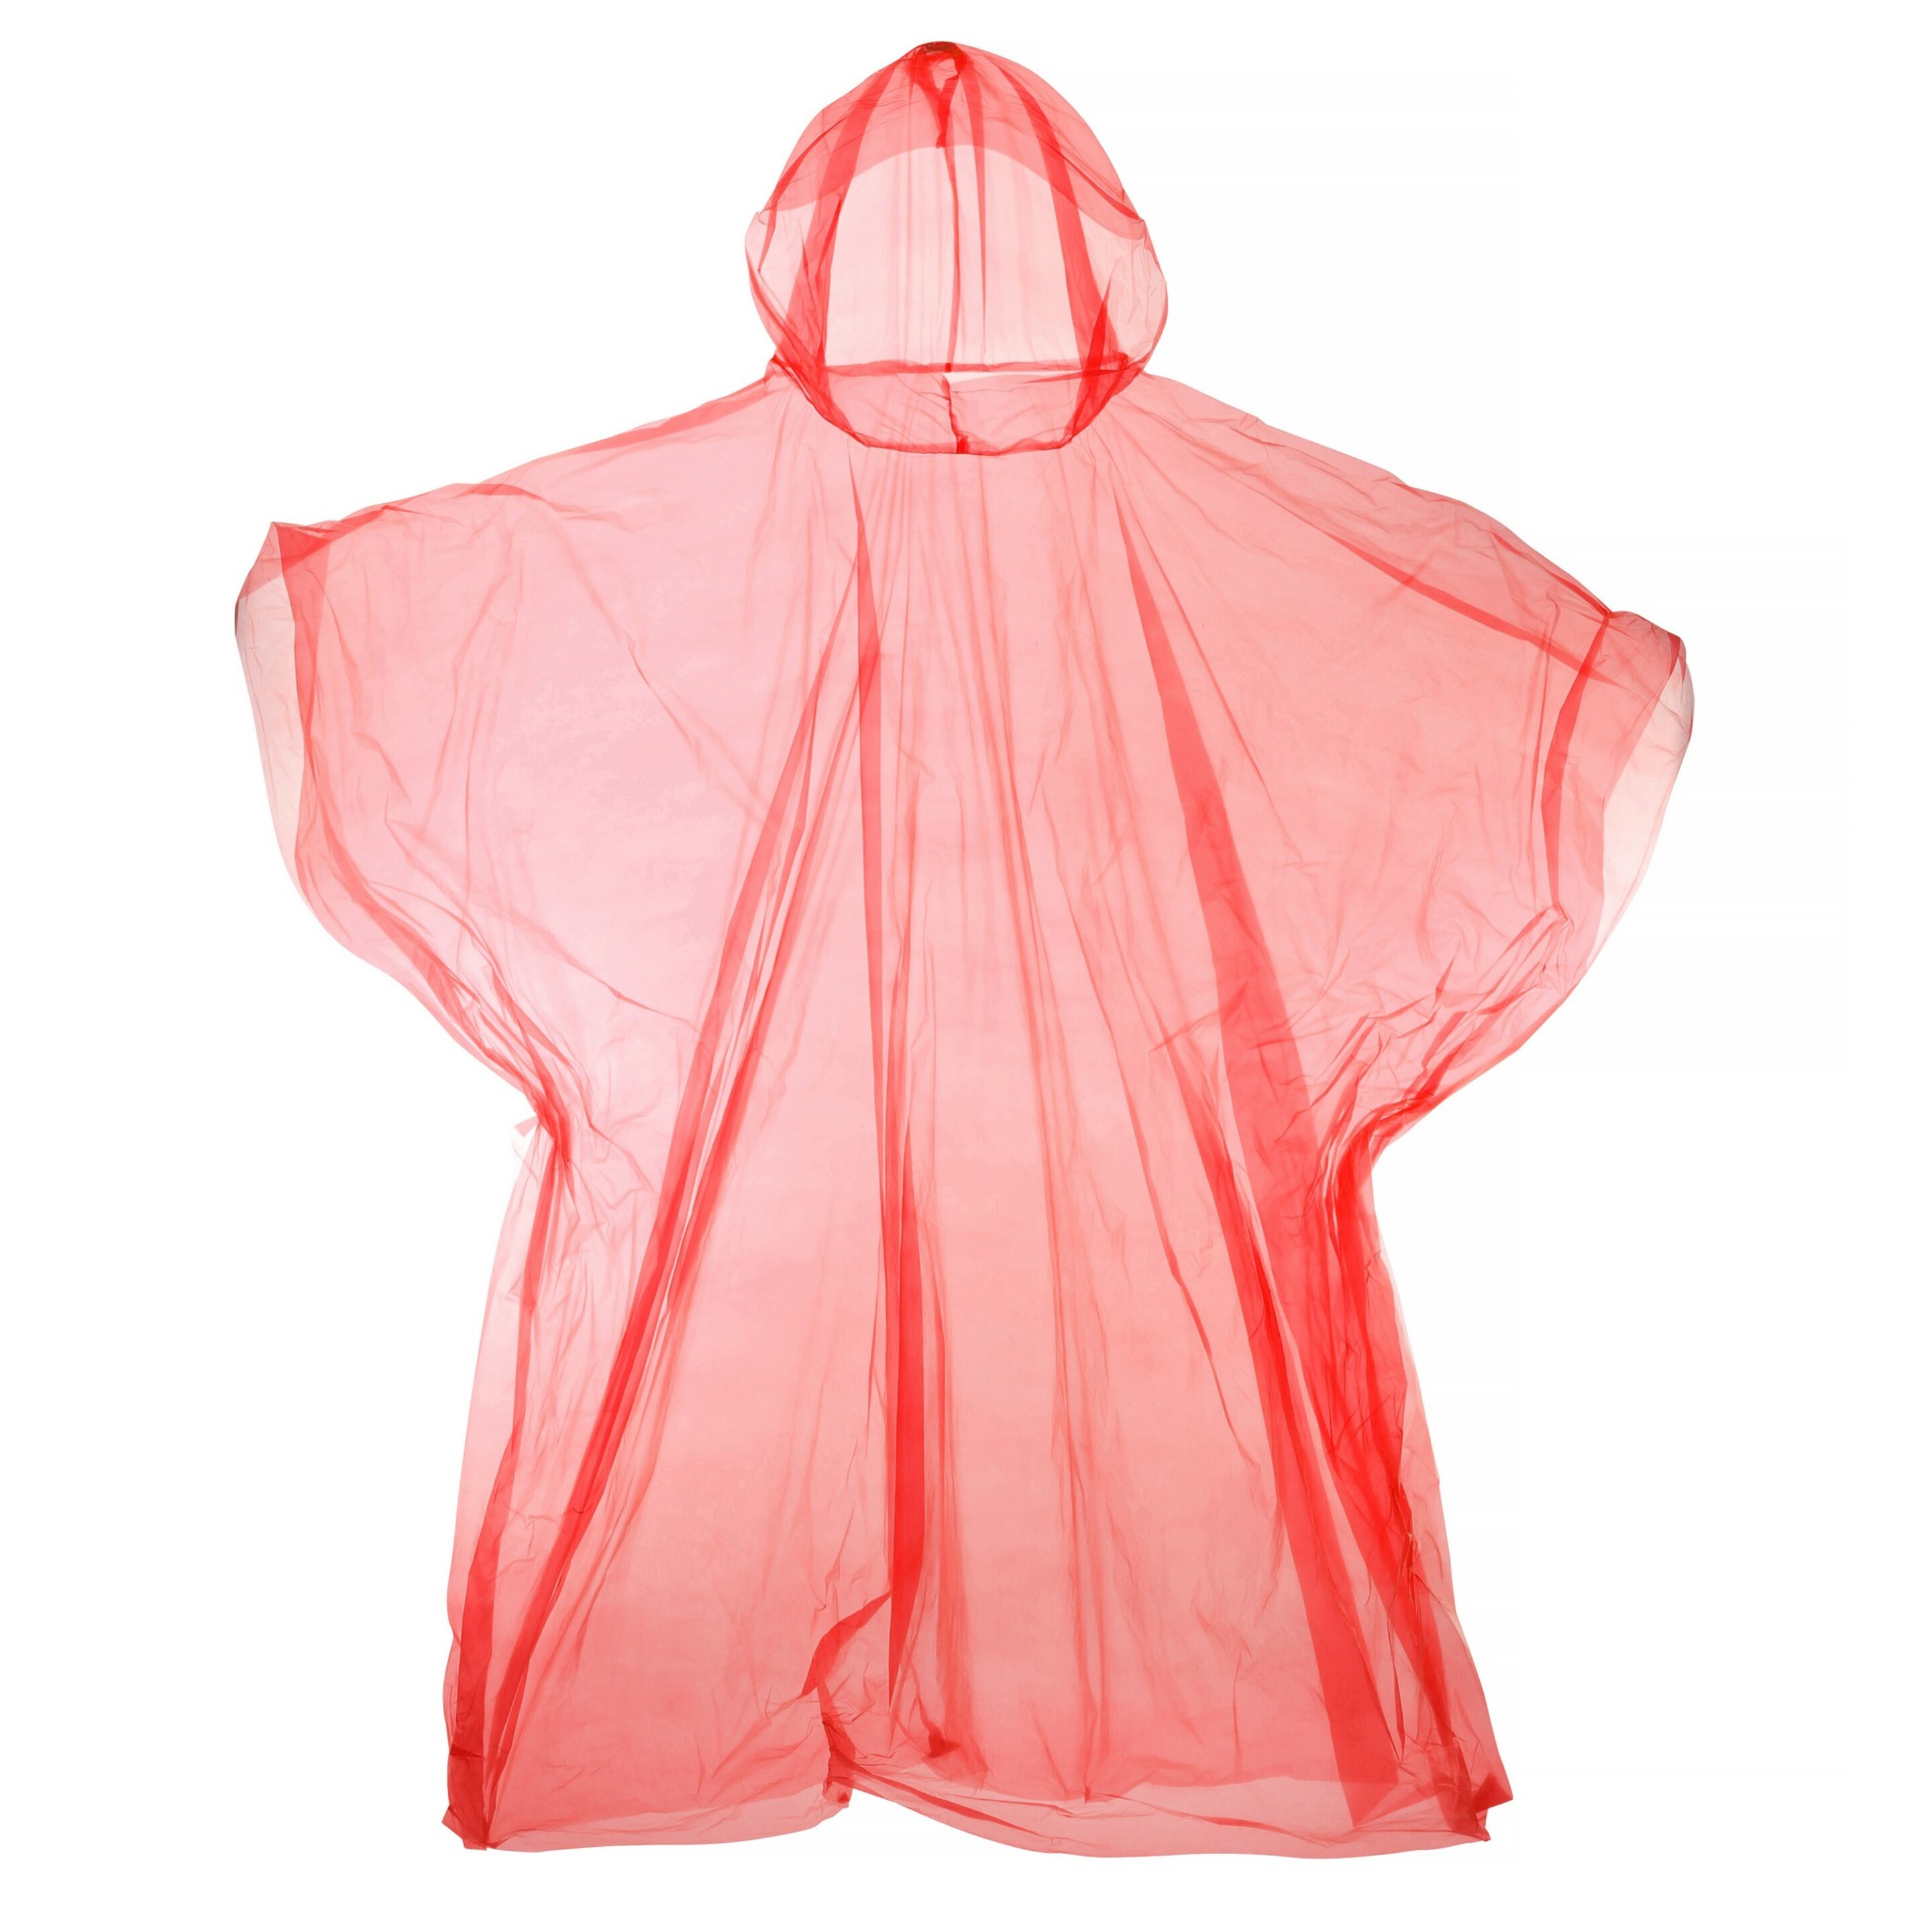 Poncho Reutilizable De Plástico Con Capucha Universal Textiles (Rojo)